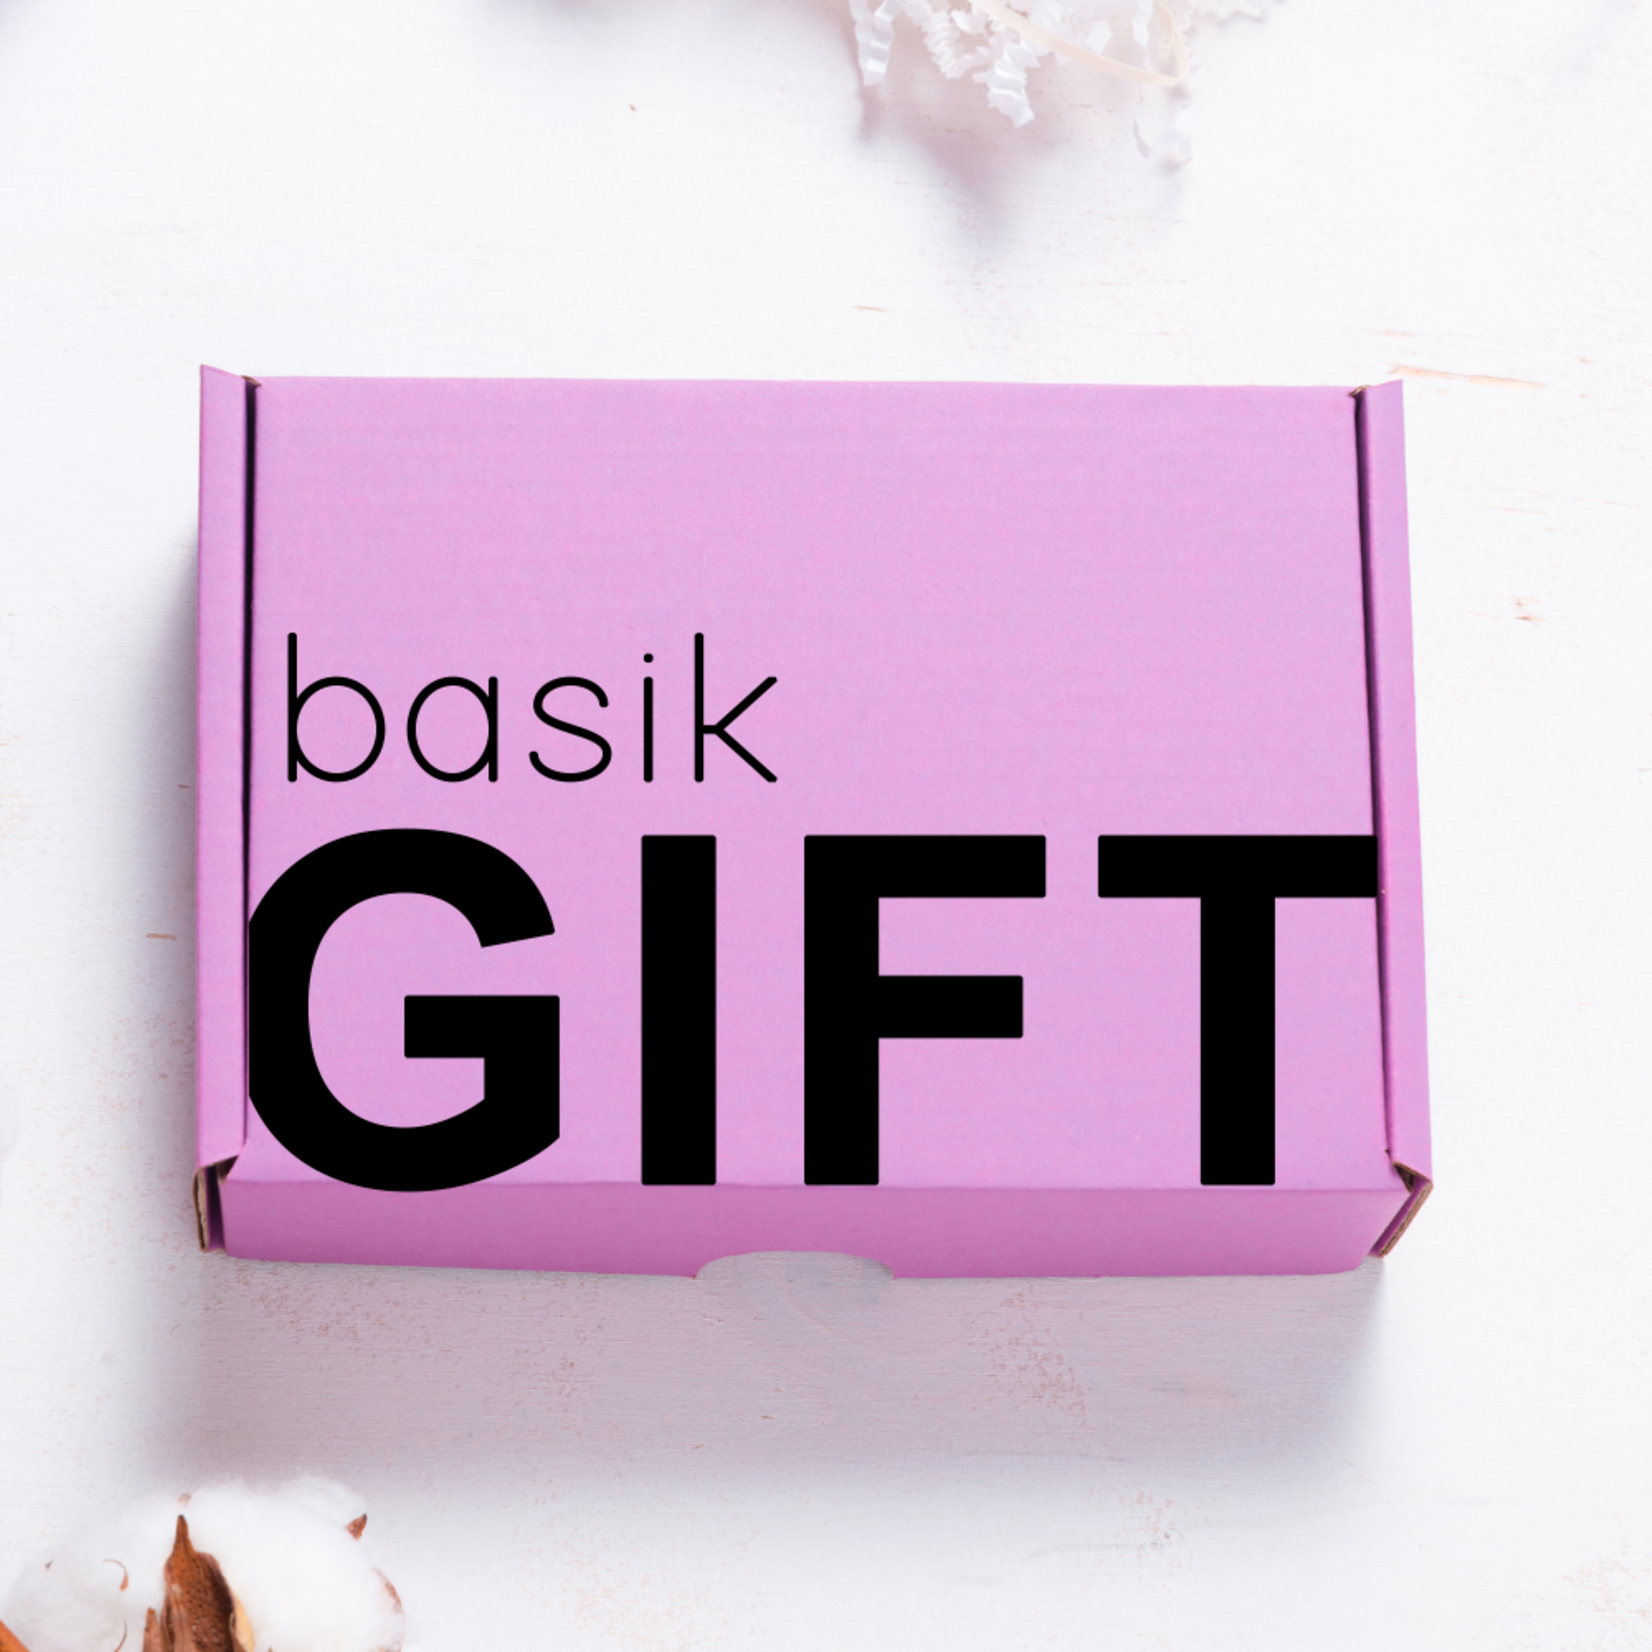 Basik Basik Gift Box | Cozy Night Essentials